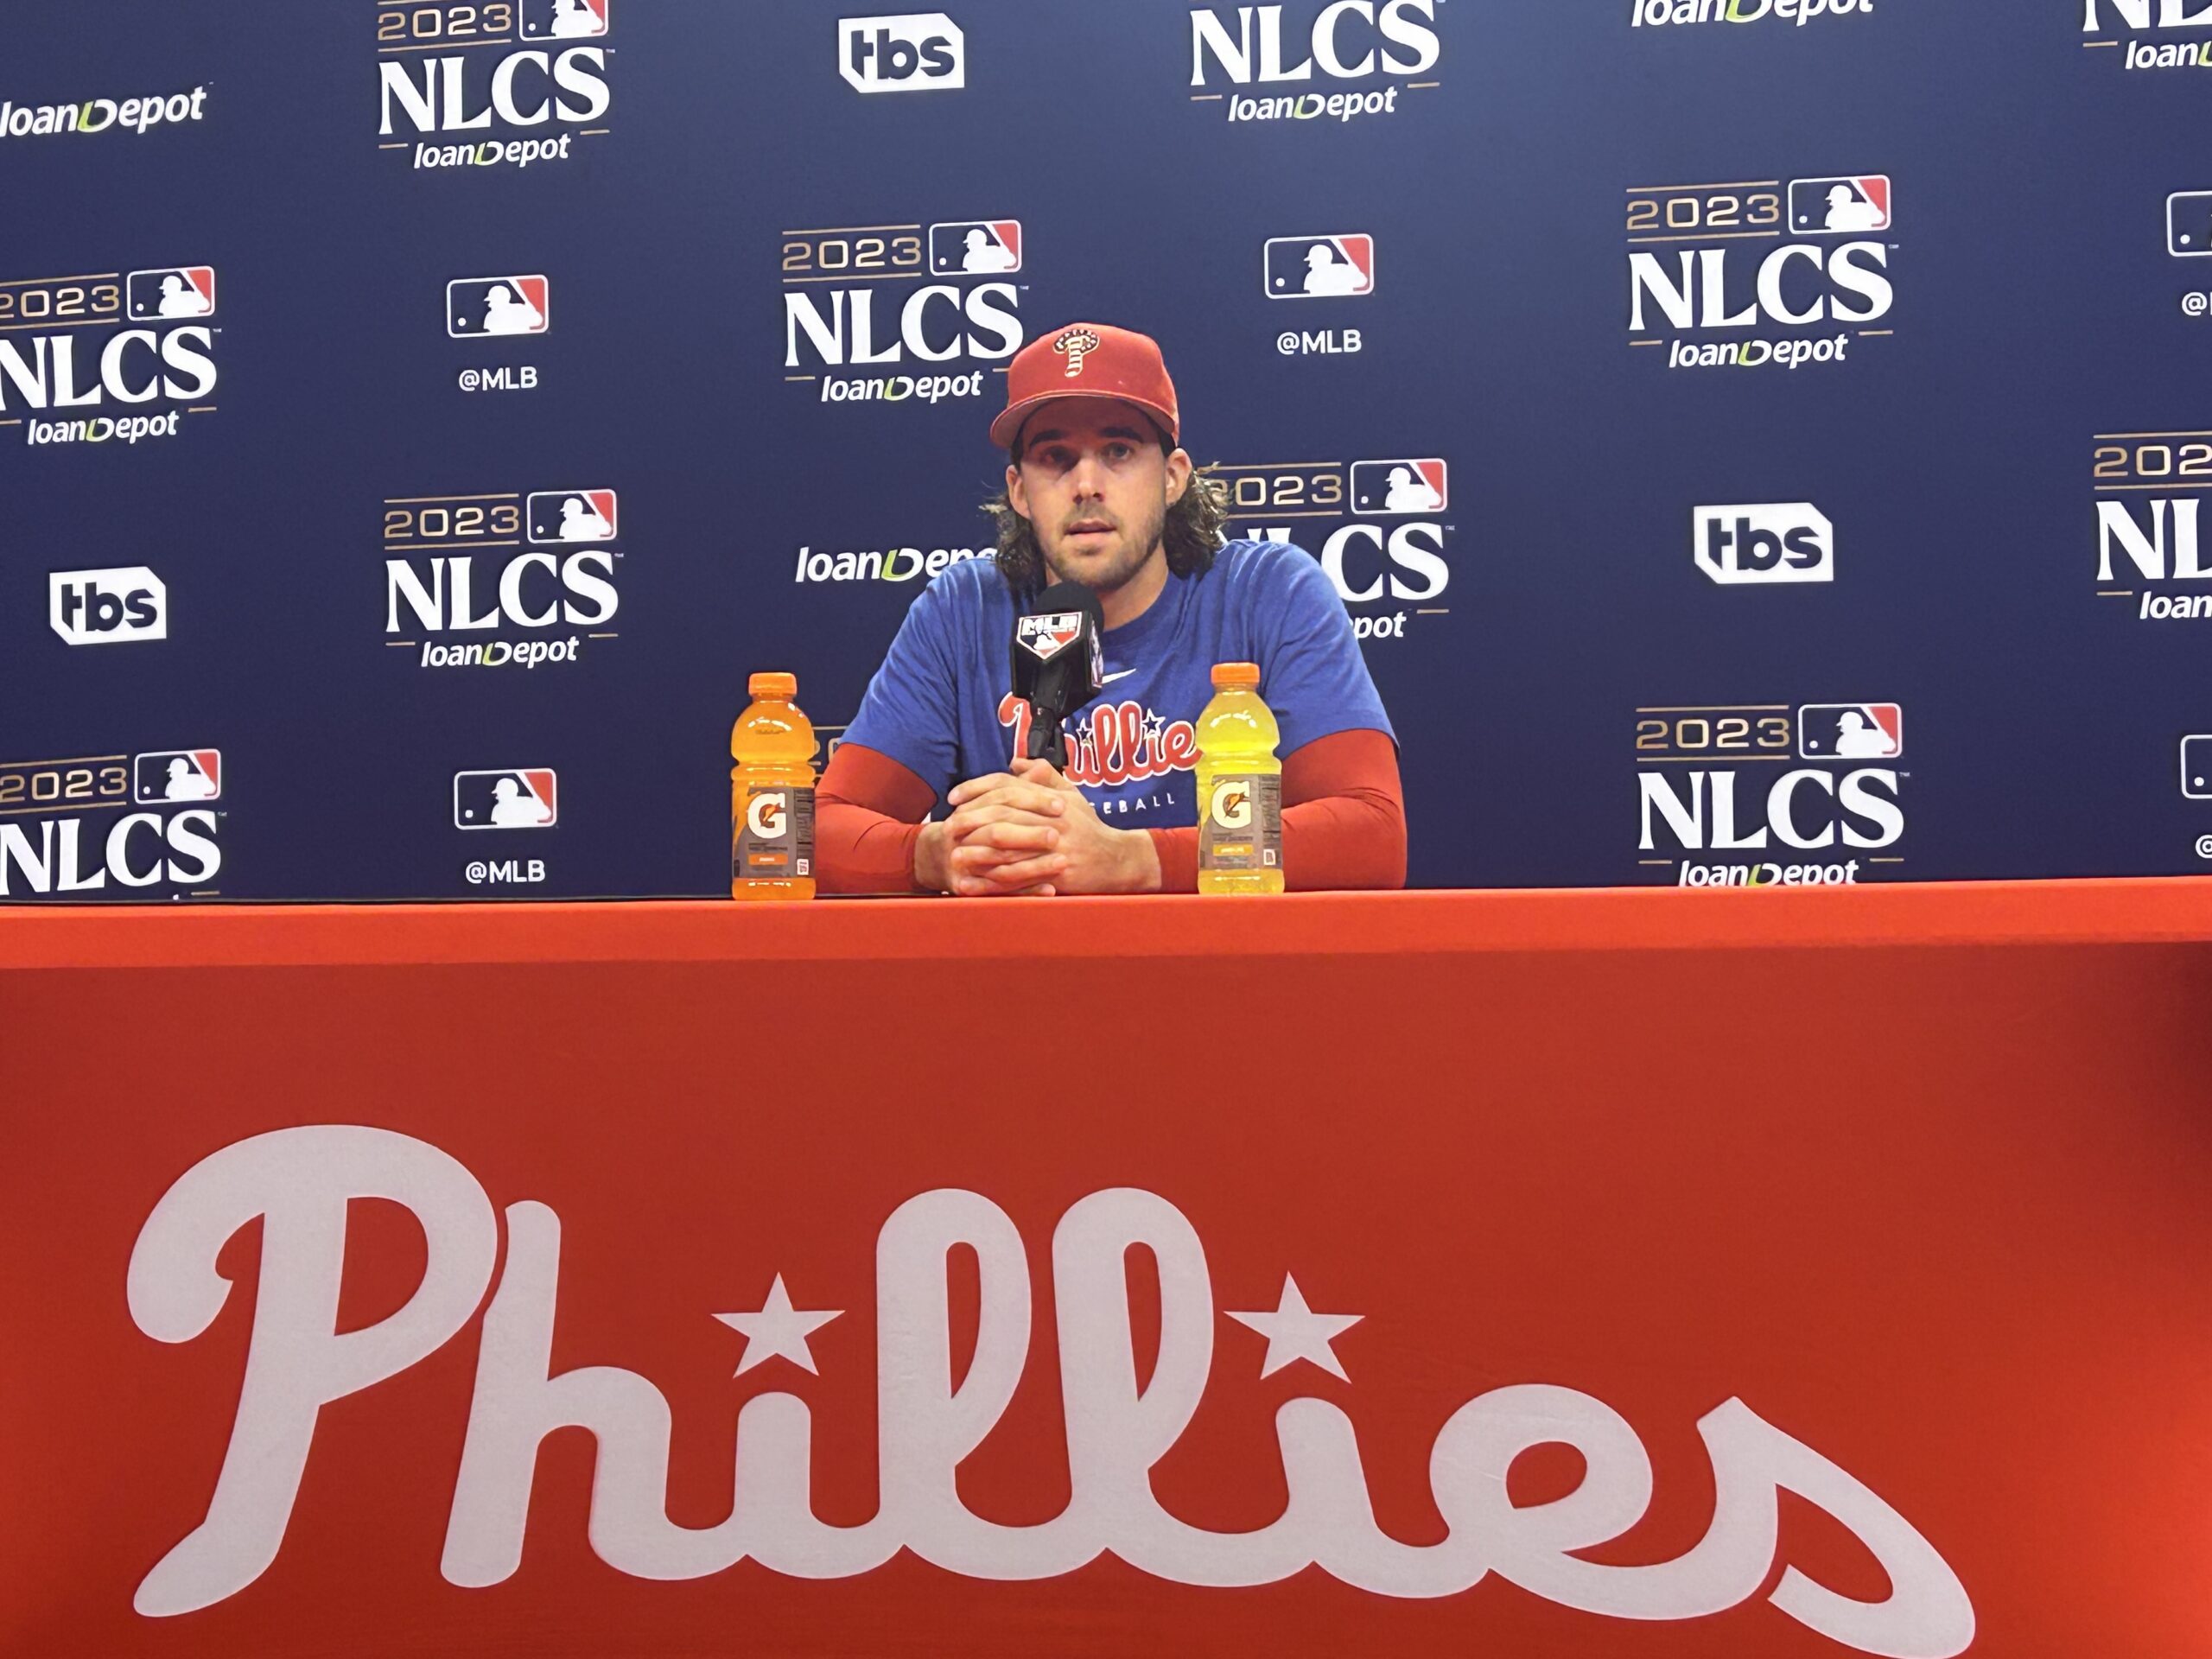 McCaffery: Aaron Nola not ready to say goodbye to Phillies